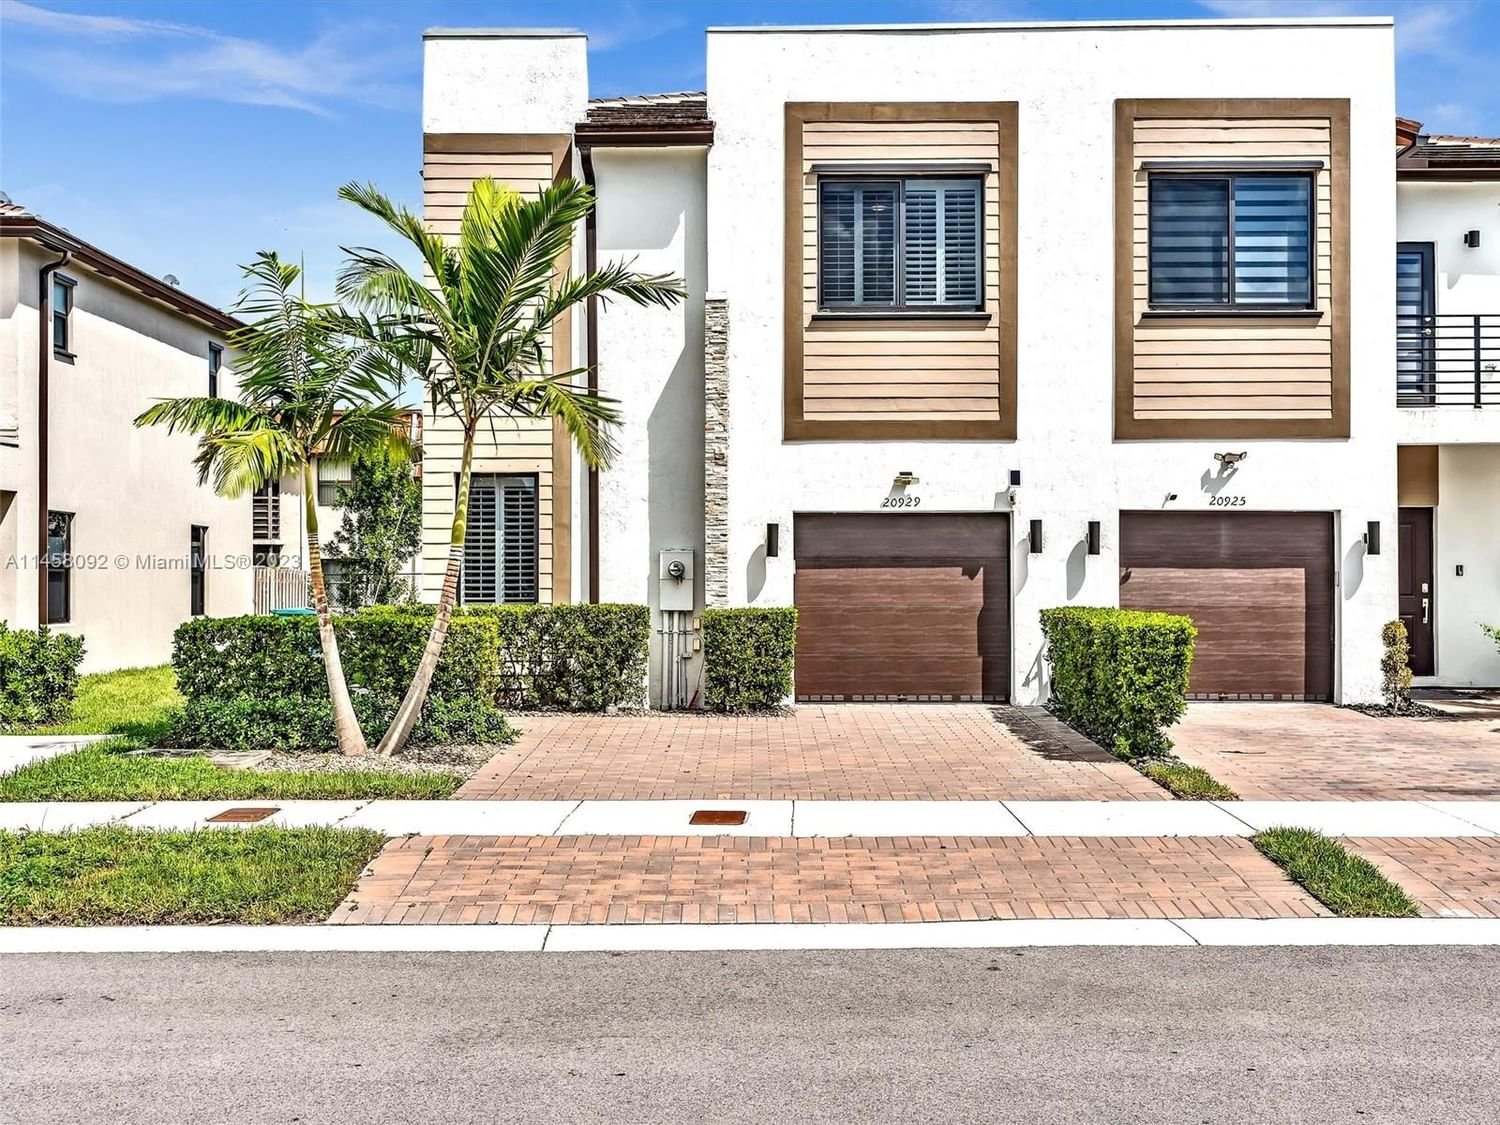 Real estate property located at 20929 8th Ave, Miami-Dade County, Miami, FL